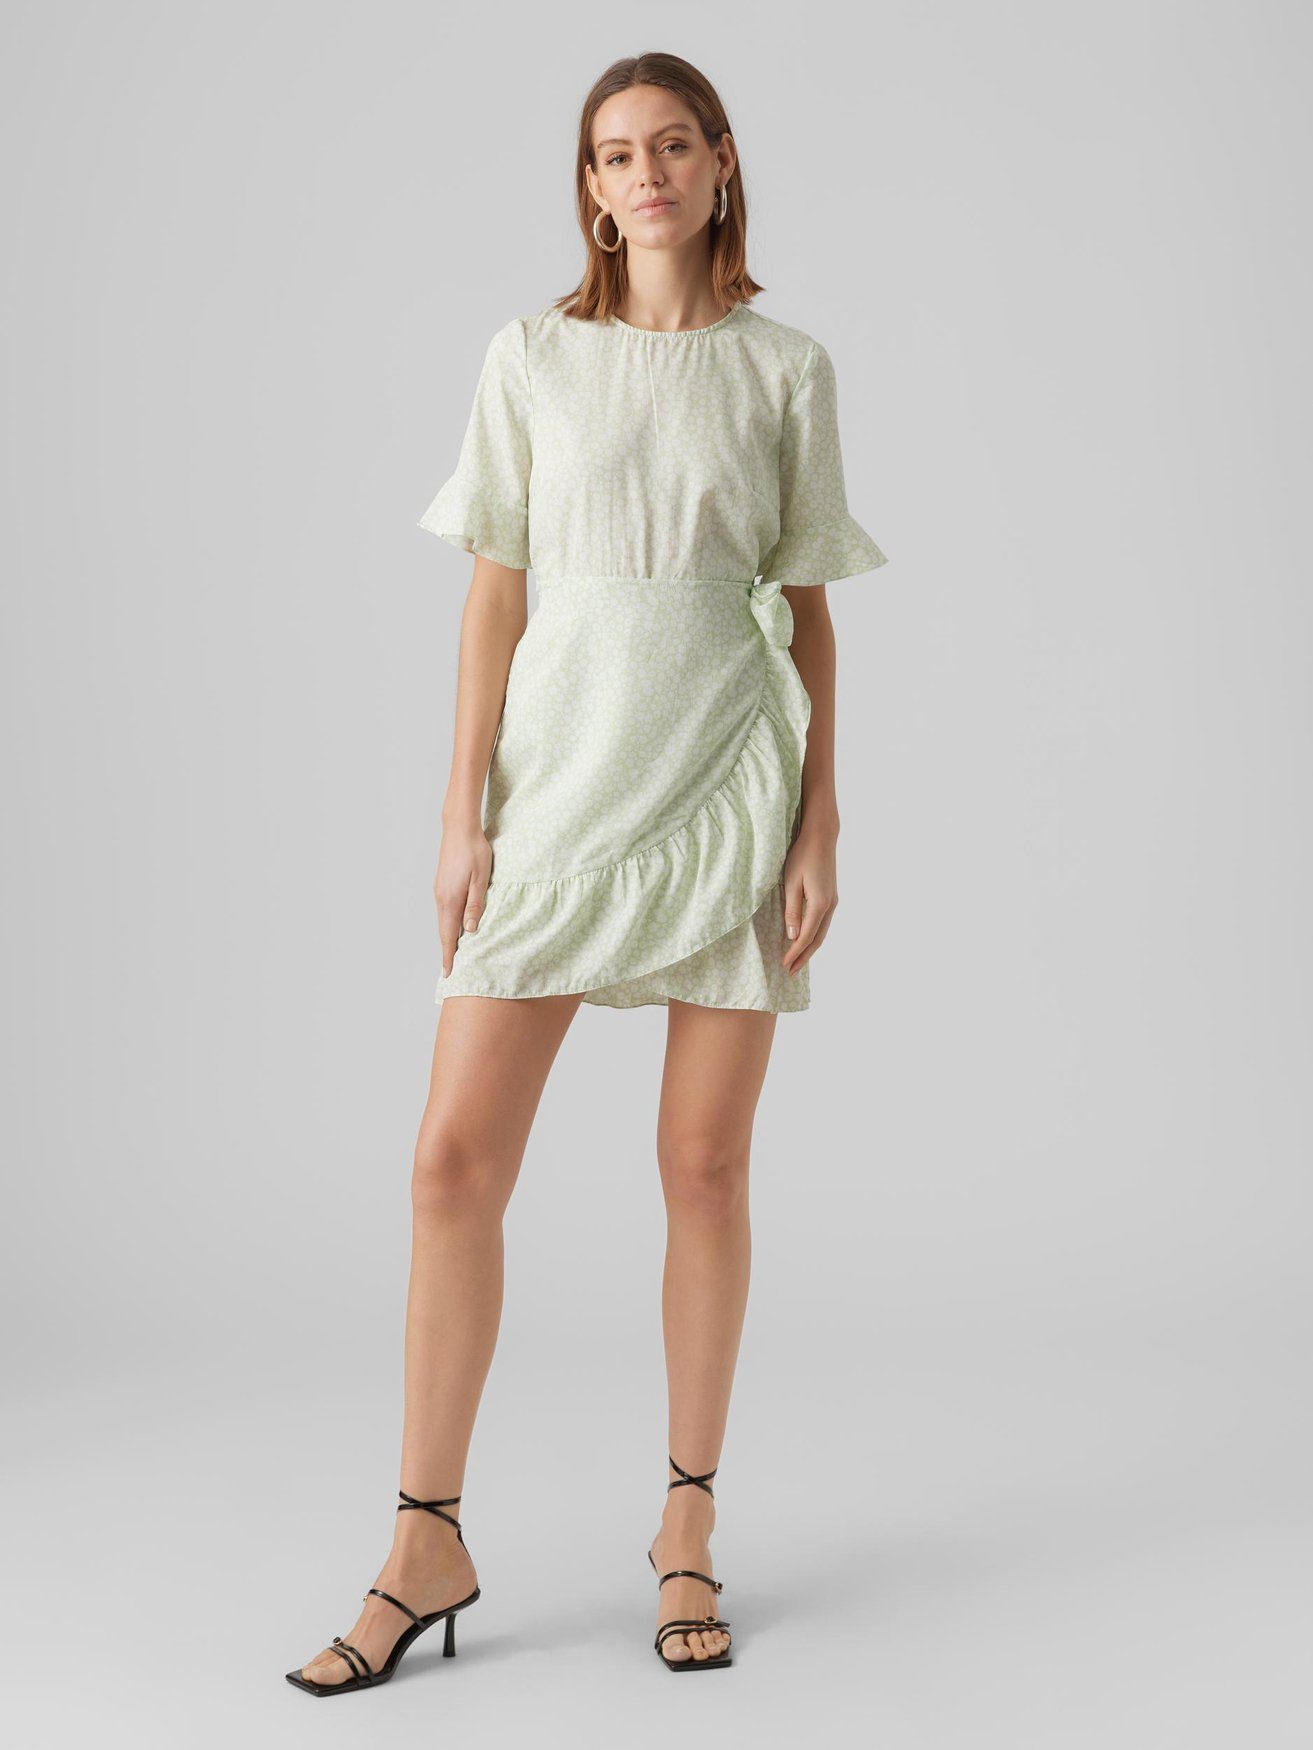 Kurzes Wickel Vero in VMHENNA (kurz) Shirtkleid 5775 Kleid Mini Moda Grün